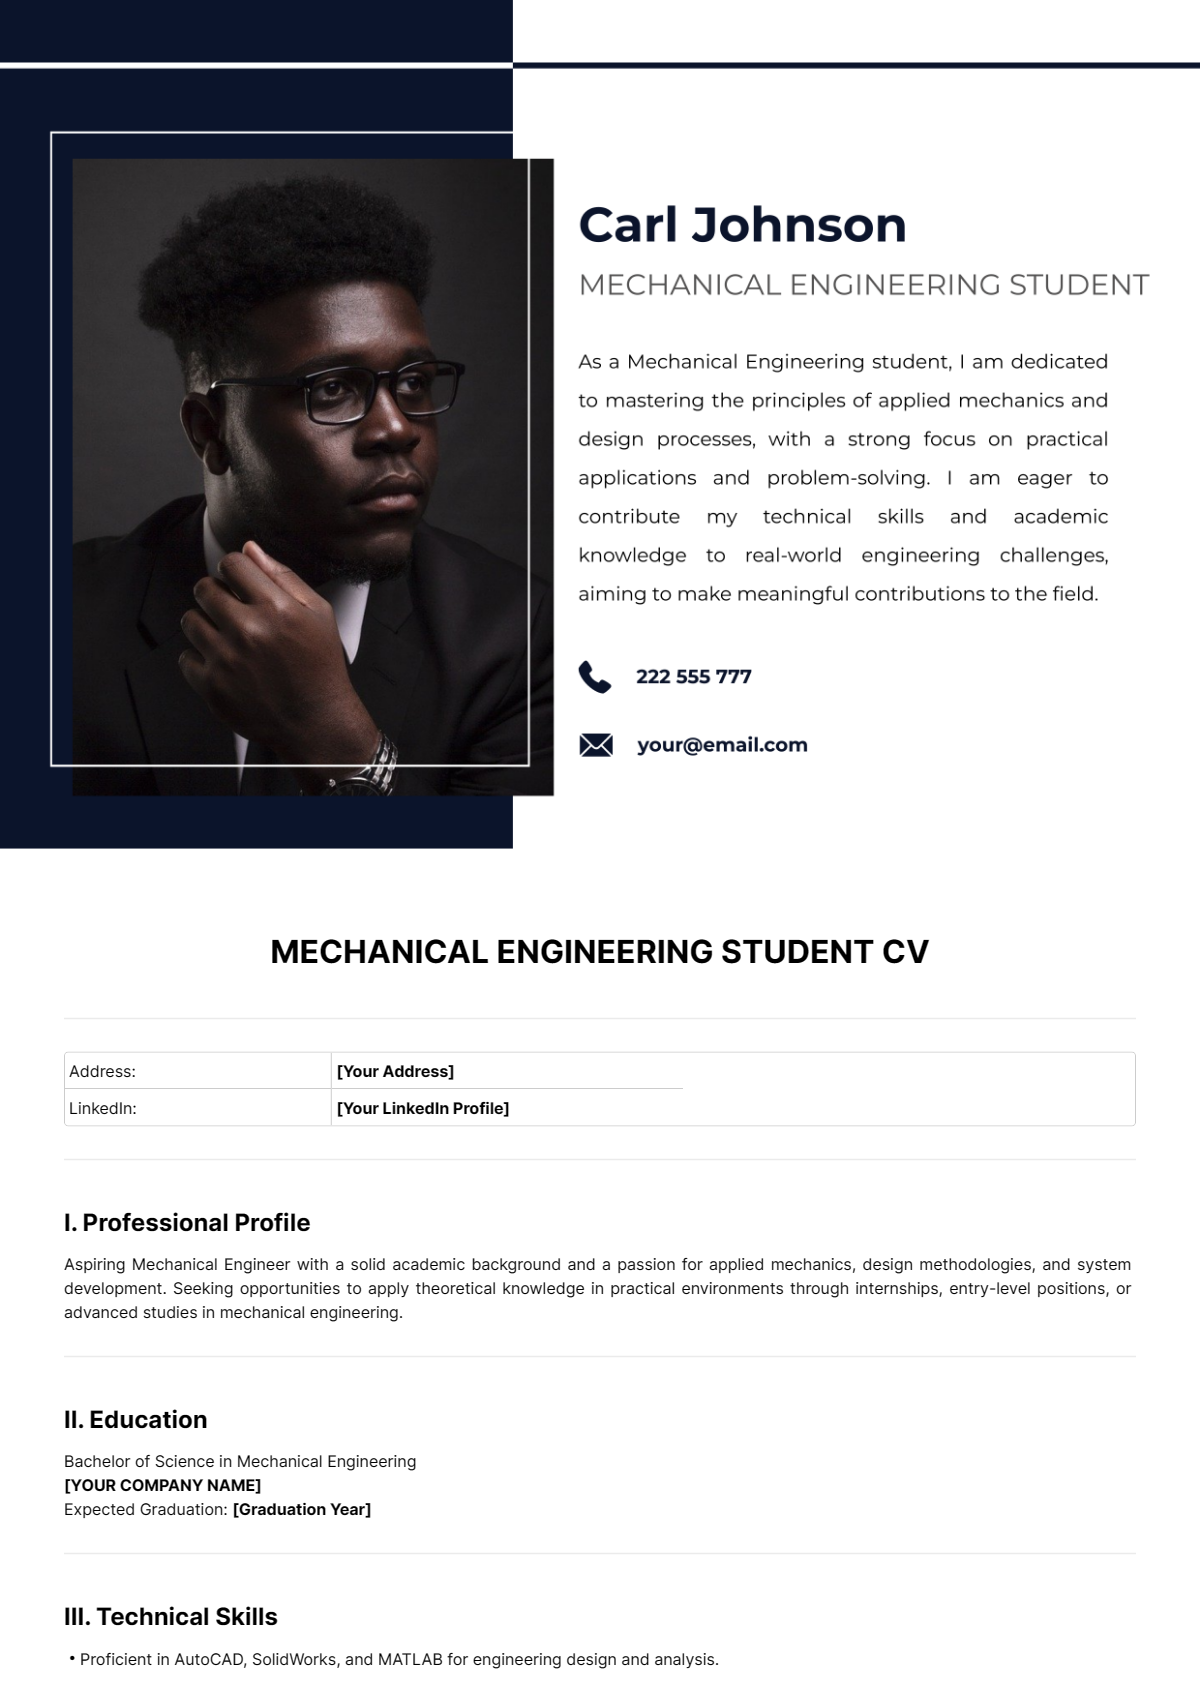 Mechanical Engineering Student CV Template